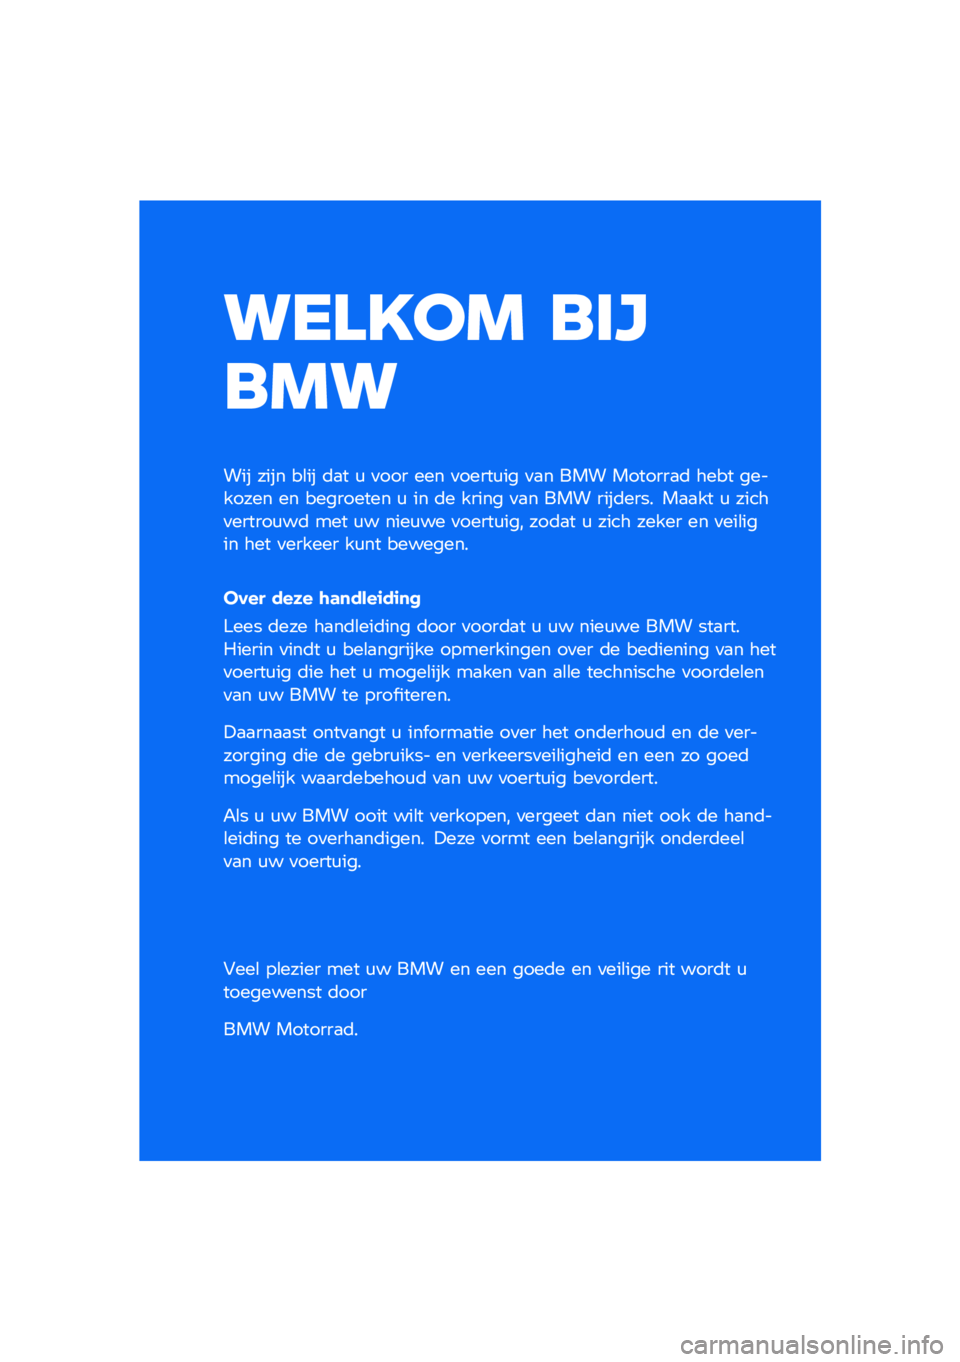 BMW MOTORRAD K 1600 B 2020  Handleiding (in Dutch) ������ �\b�	�

�\b��
��� ���� ��\b�� �	�
� �\f �
��� ��� �
�����\f�� �
�
� ��� �������
�	 ���� �������� �� ��������� �\f �� �	� ���